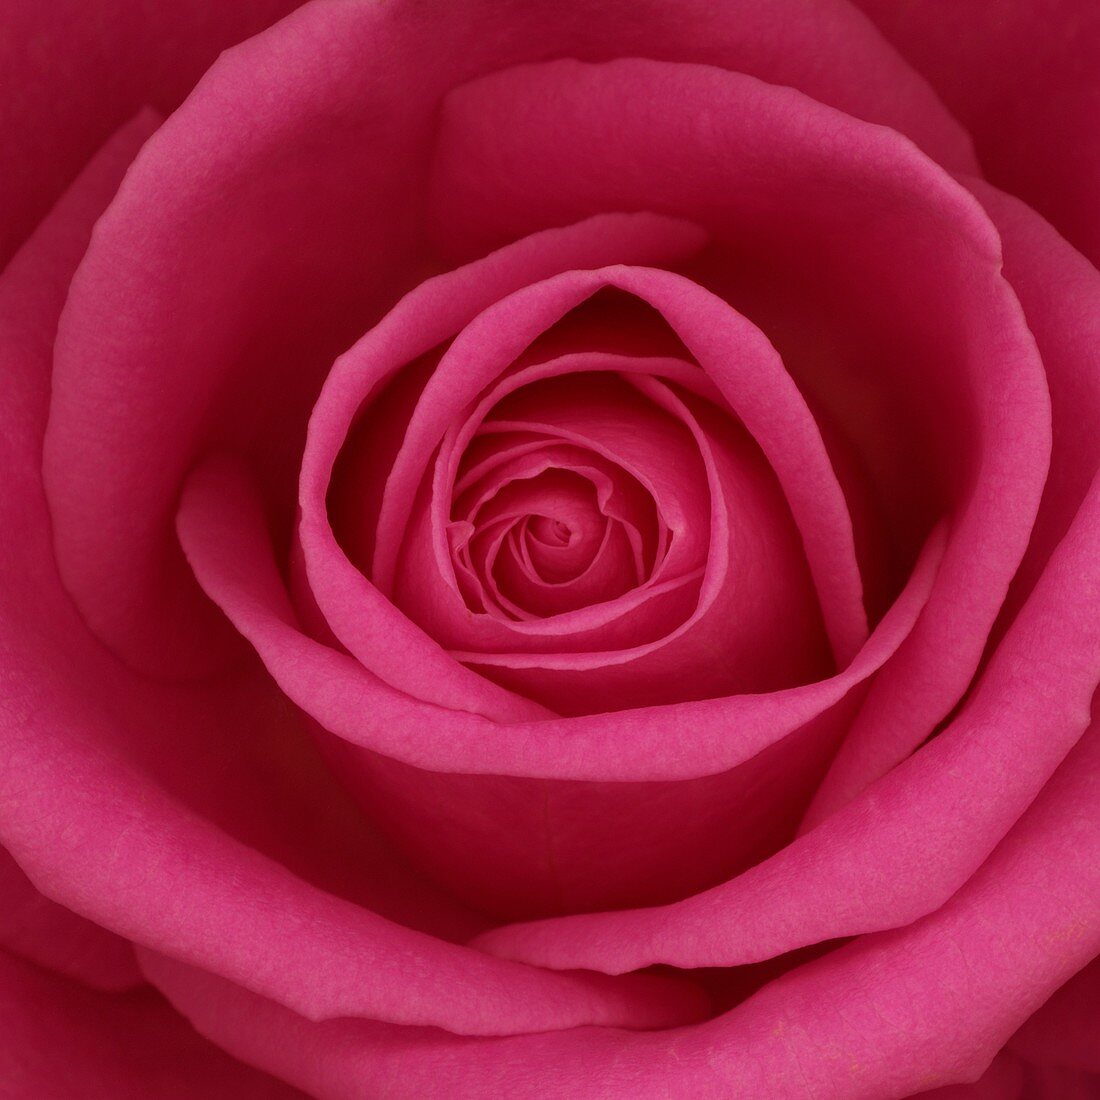 Beautiful open pink rose bloom, romantic